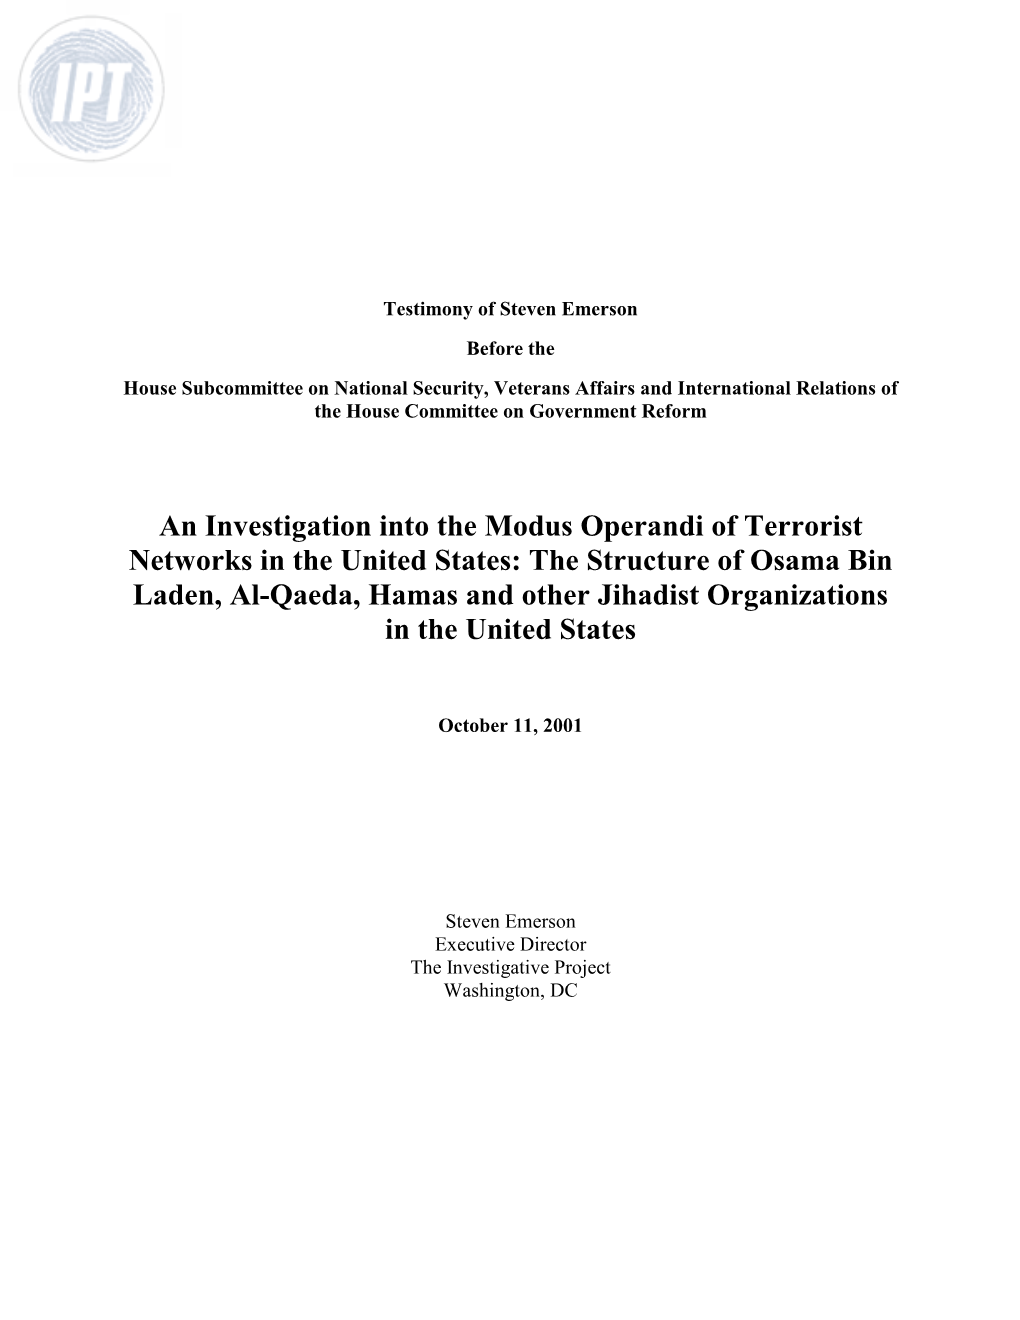 An Investigation Into the Modus Operandi of Terrorist Networks In